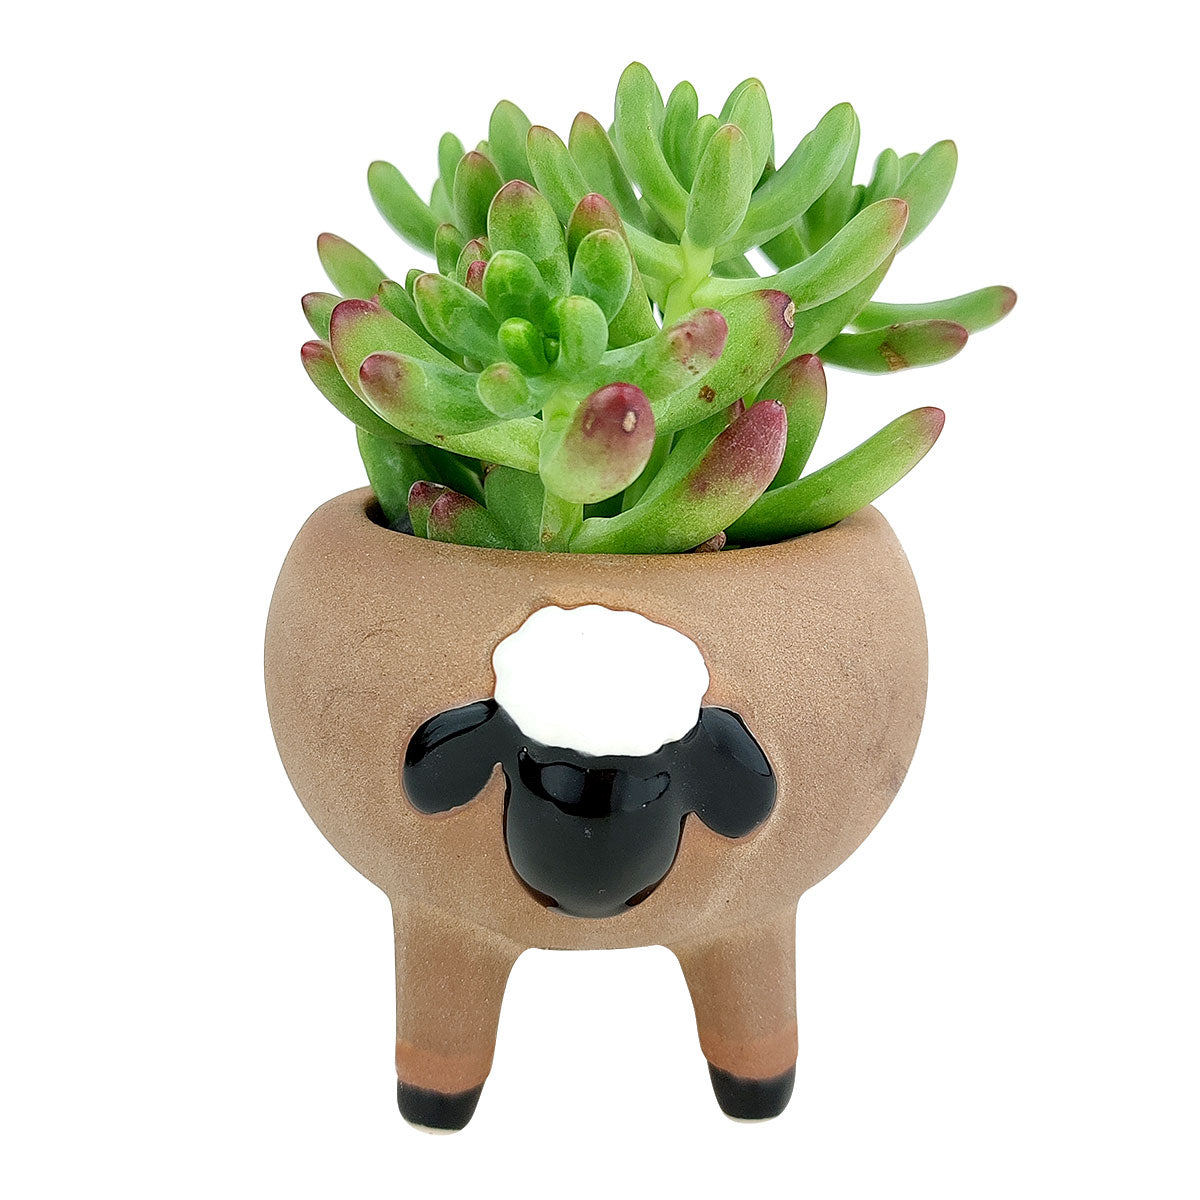 Cute Sheep Animals Ceramic Planter Pots for Succulent and Flowers, Ceramic Pot, Animal Pot, Mini ceramic pot for sale, Succulent pot for sale, Succulent gift decor ideas